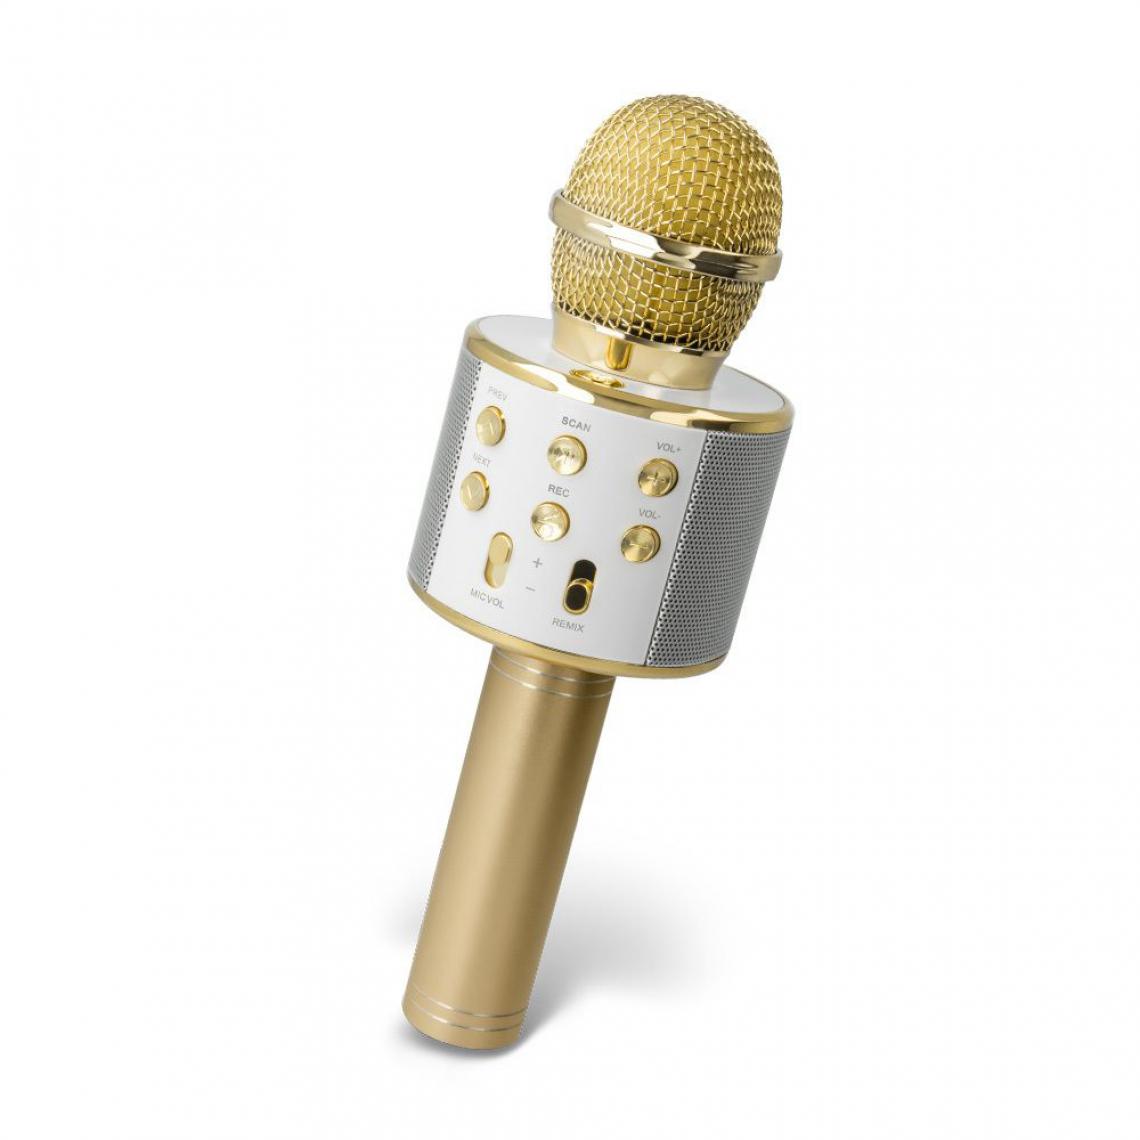 Ozzzo - Microphone Karaoke bluetooth haut parleur ozzzo Gold Or pour Samsung Galaxy Note FE N935FD - Autres accessoires smartphone